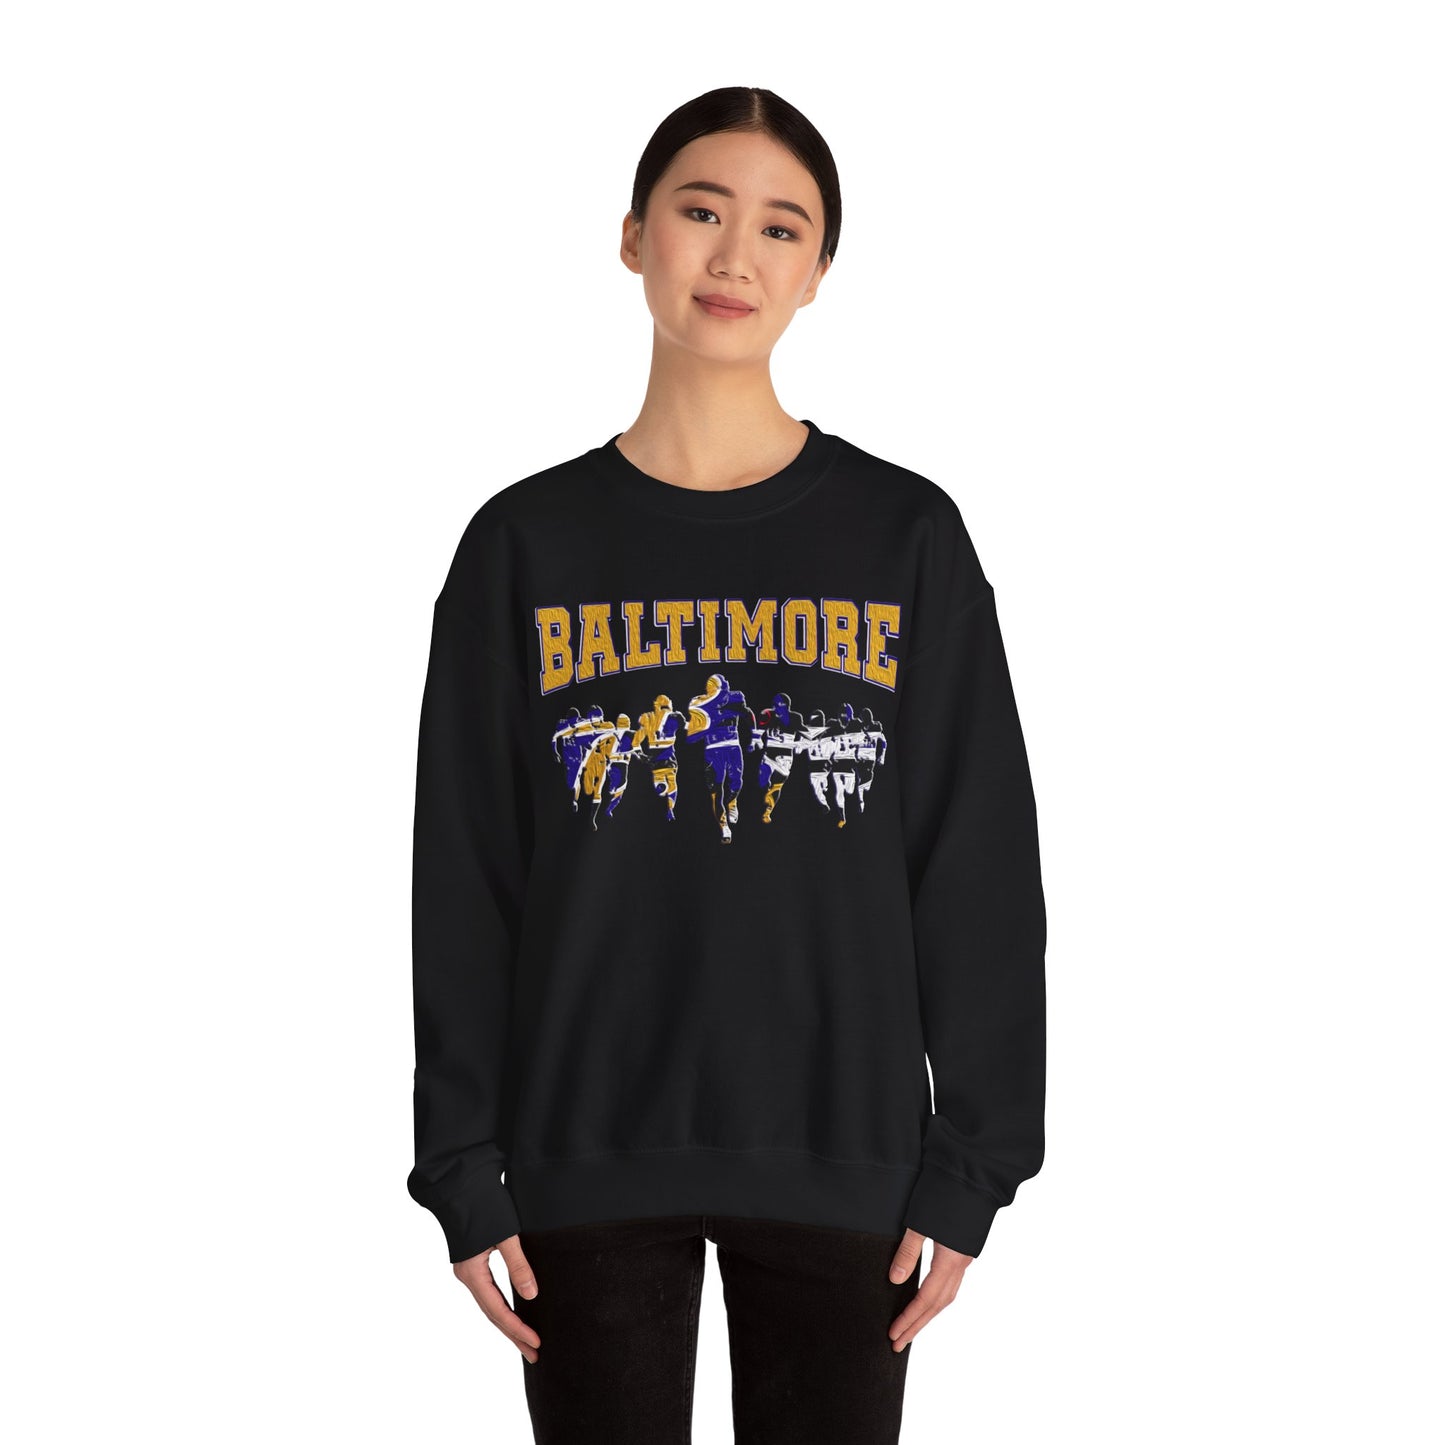 Baltimore Football  - Unisex - Heavy Blend Crewneck Sweatshirt - Oil Paint Print Style